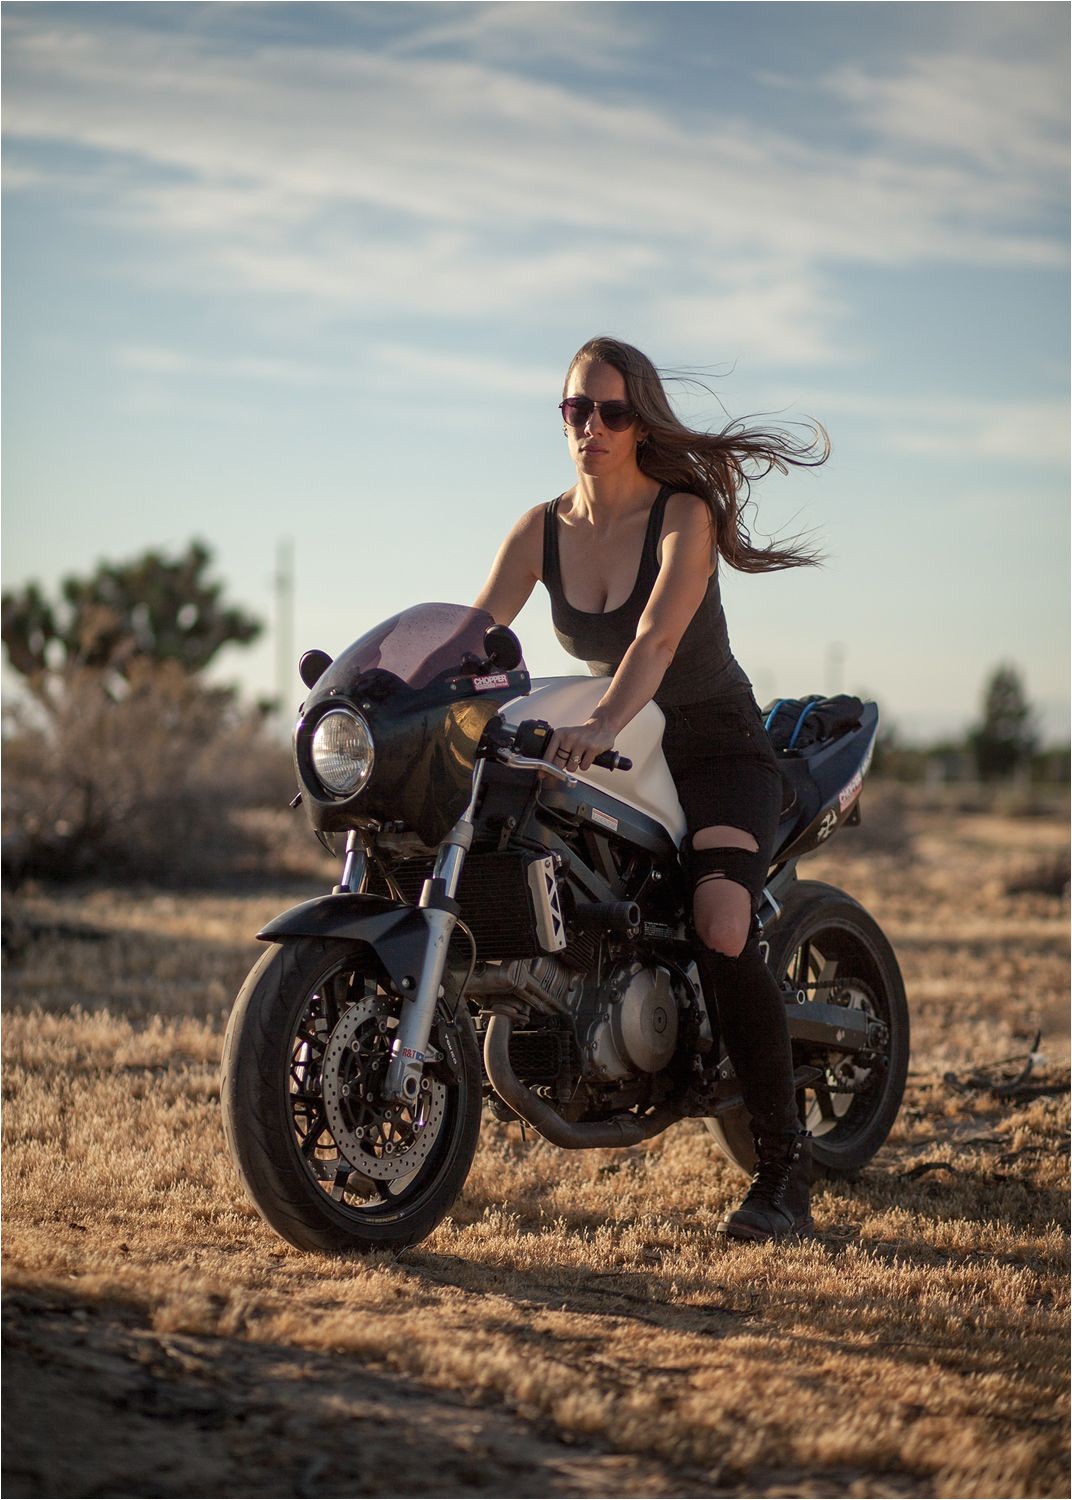 A real biker woman